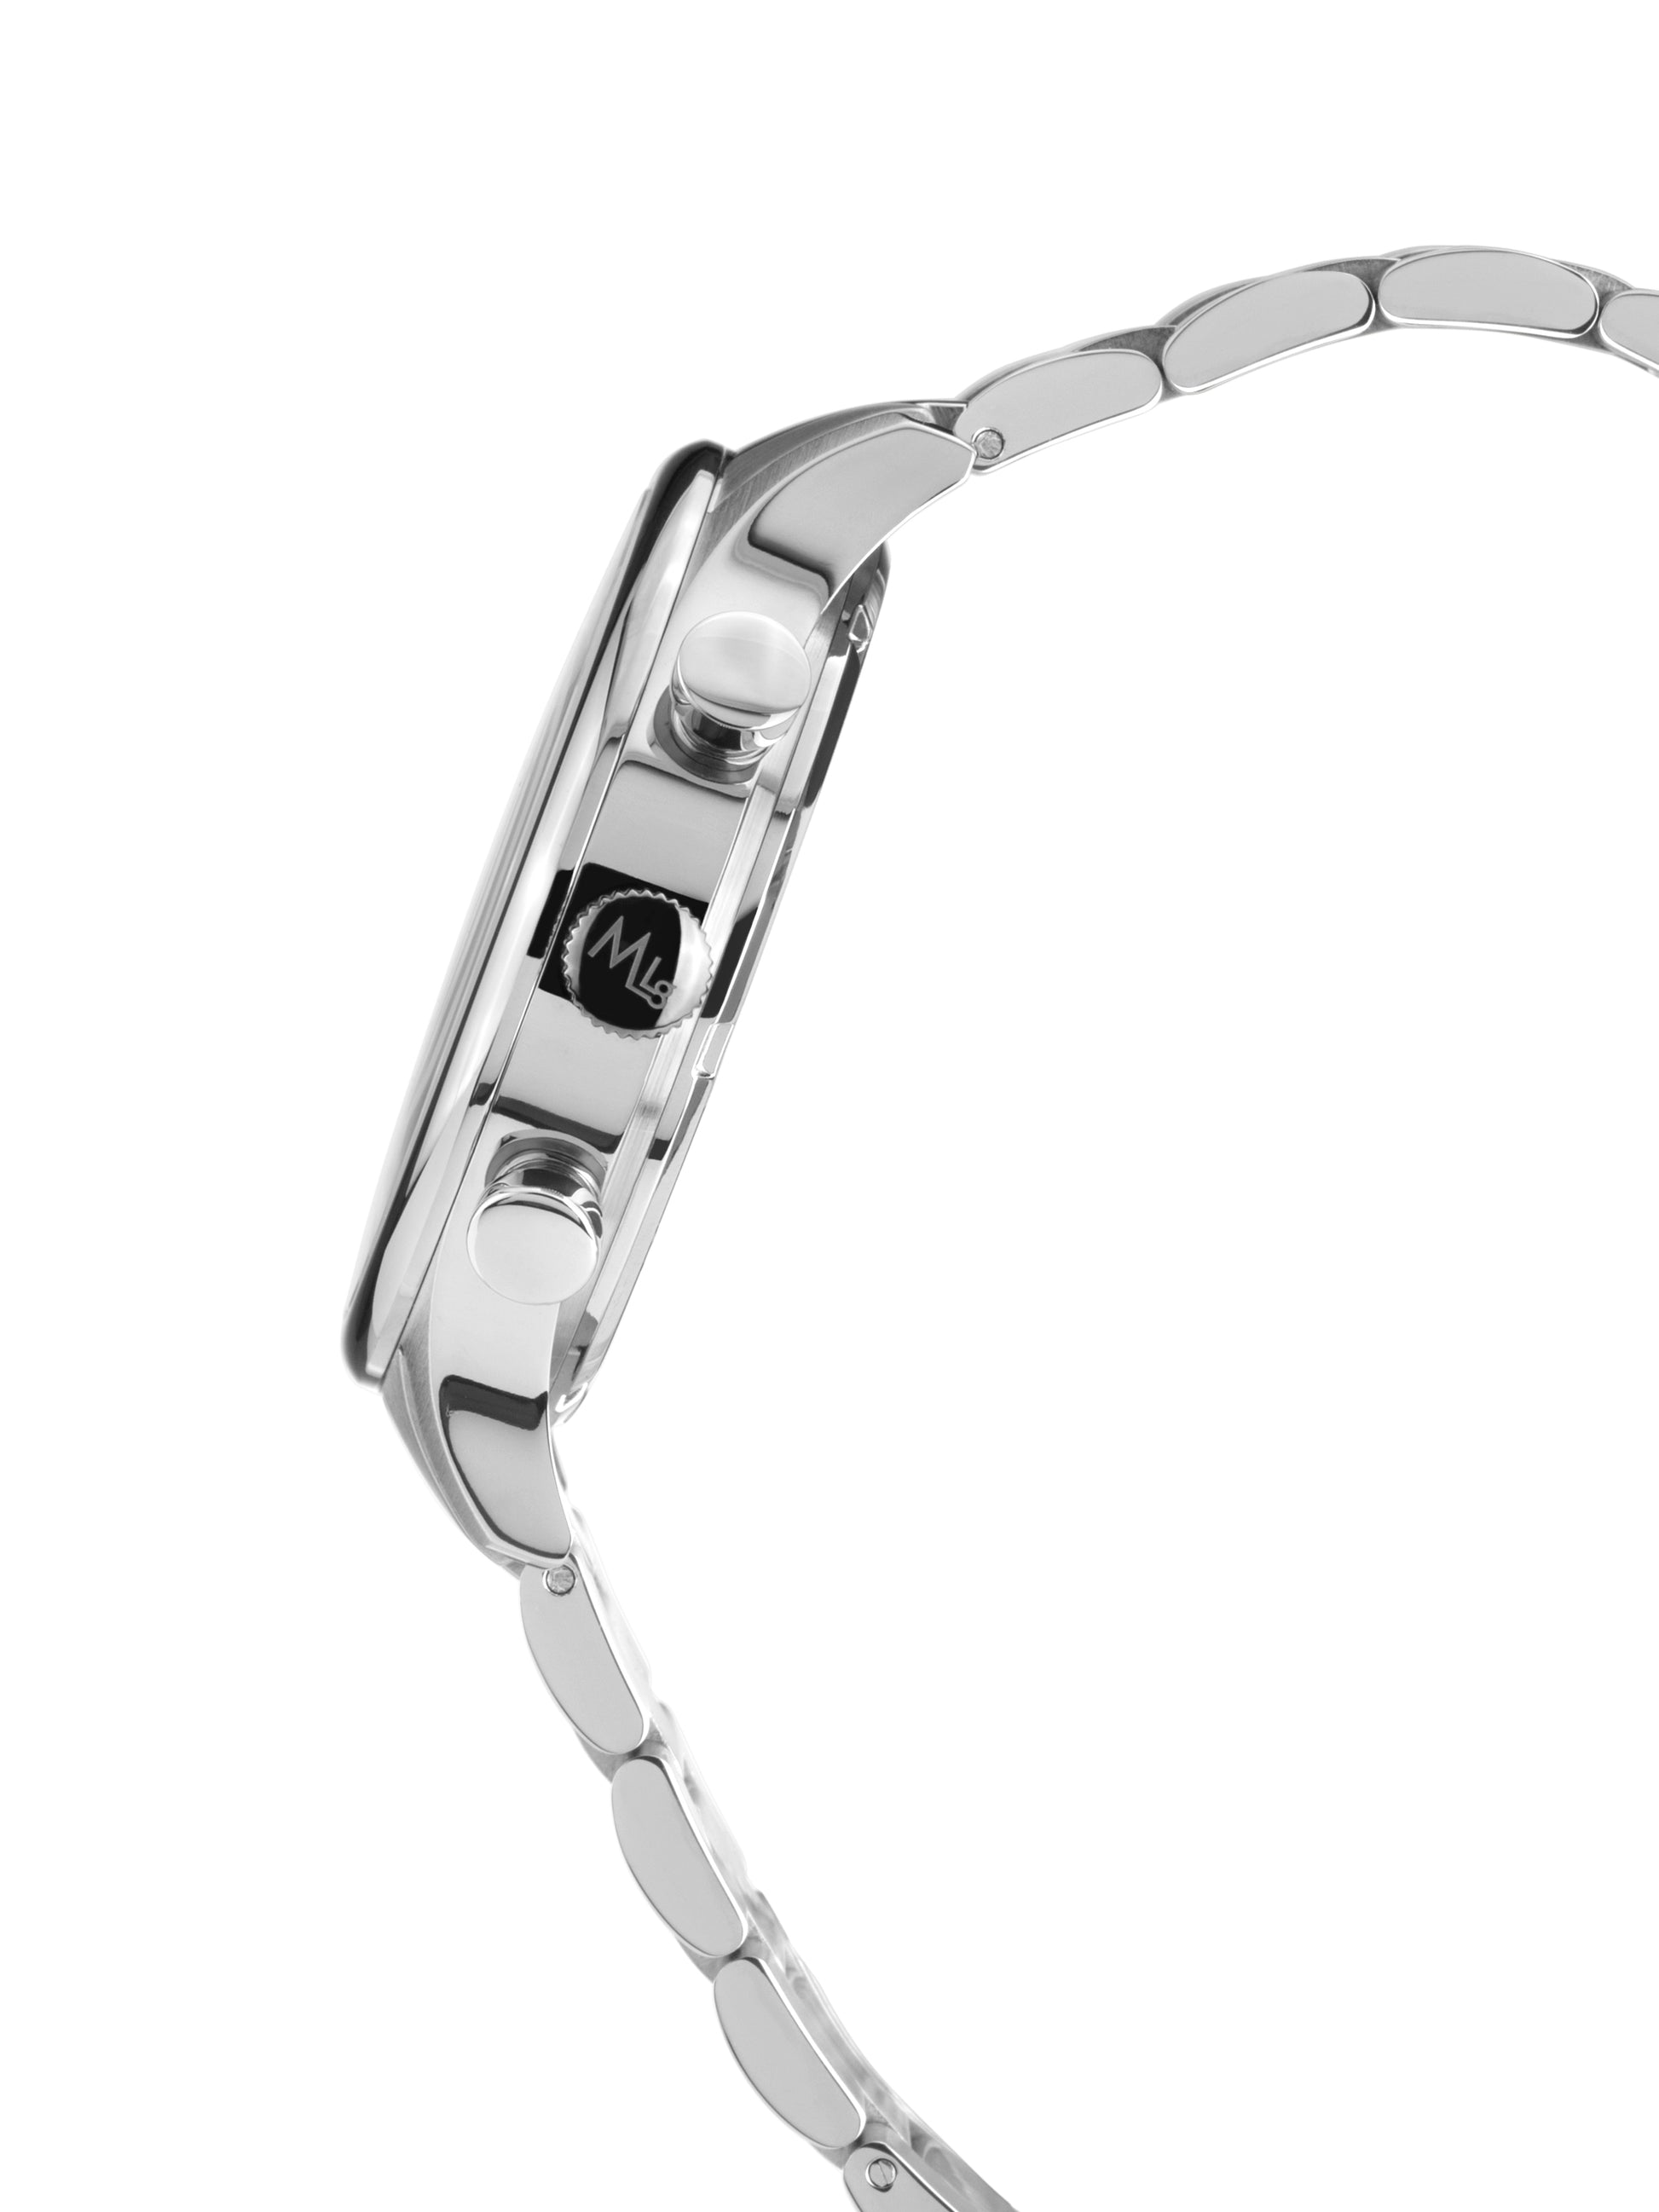 Automatic watches — Métropolitain — Mathieu Legrand — steel blue steel